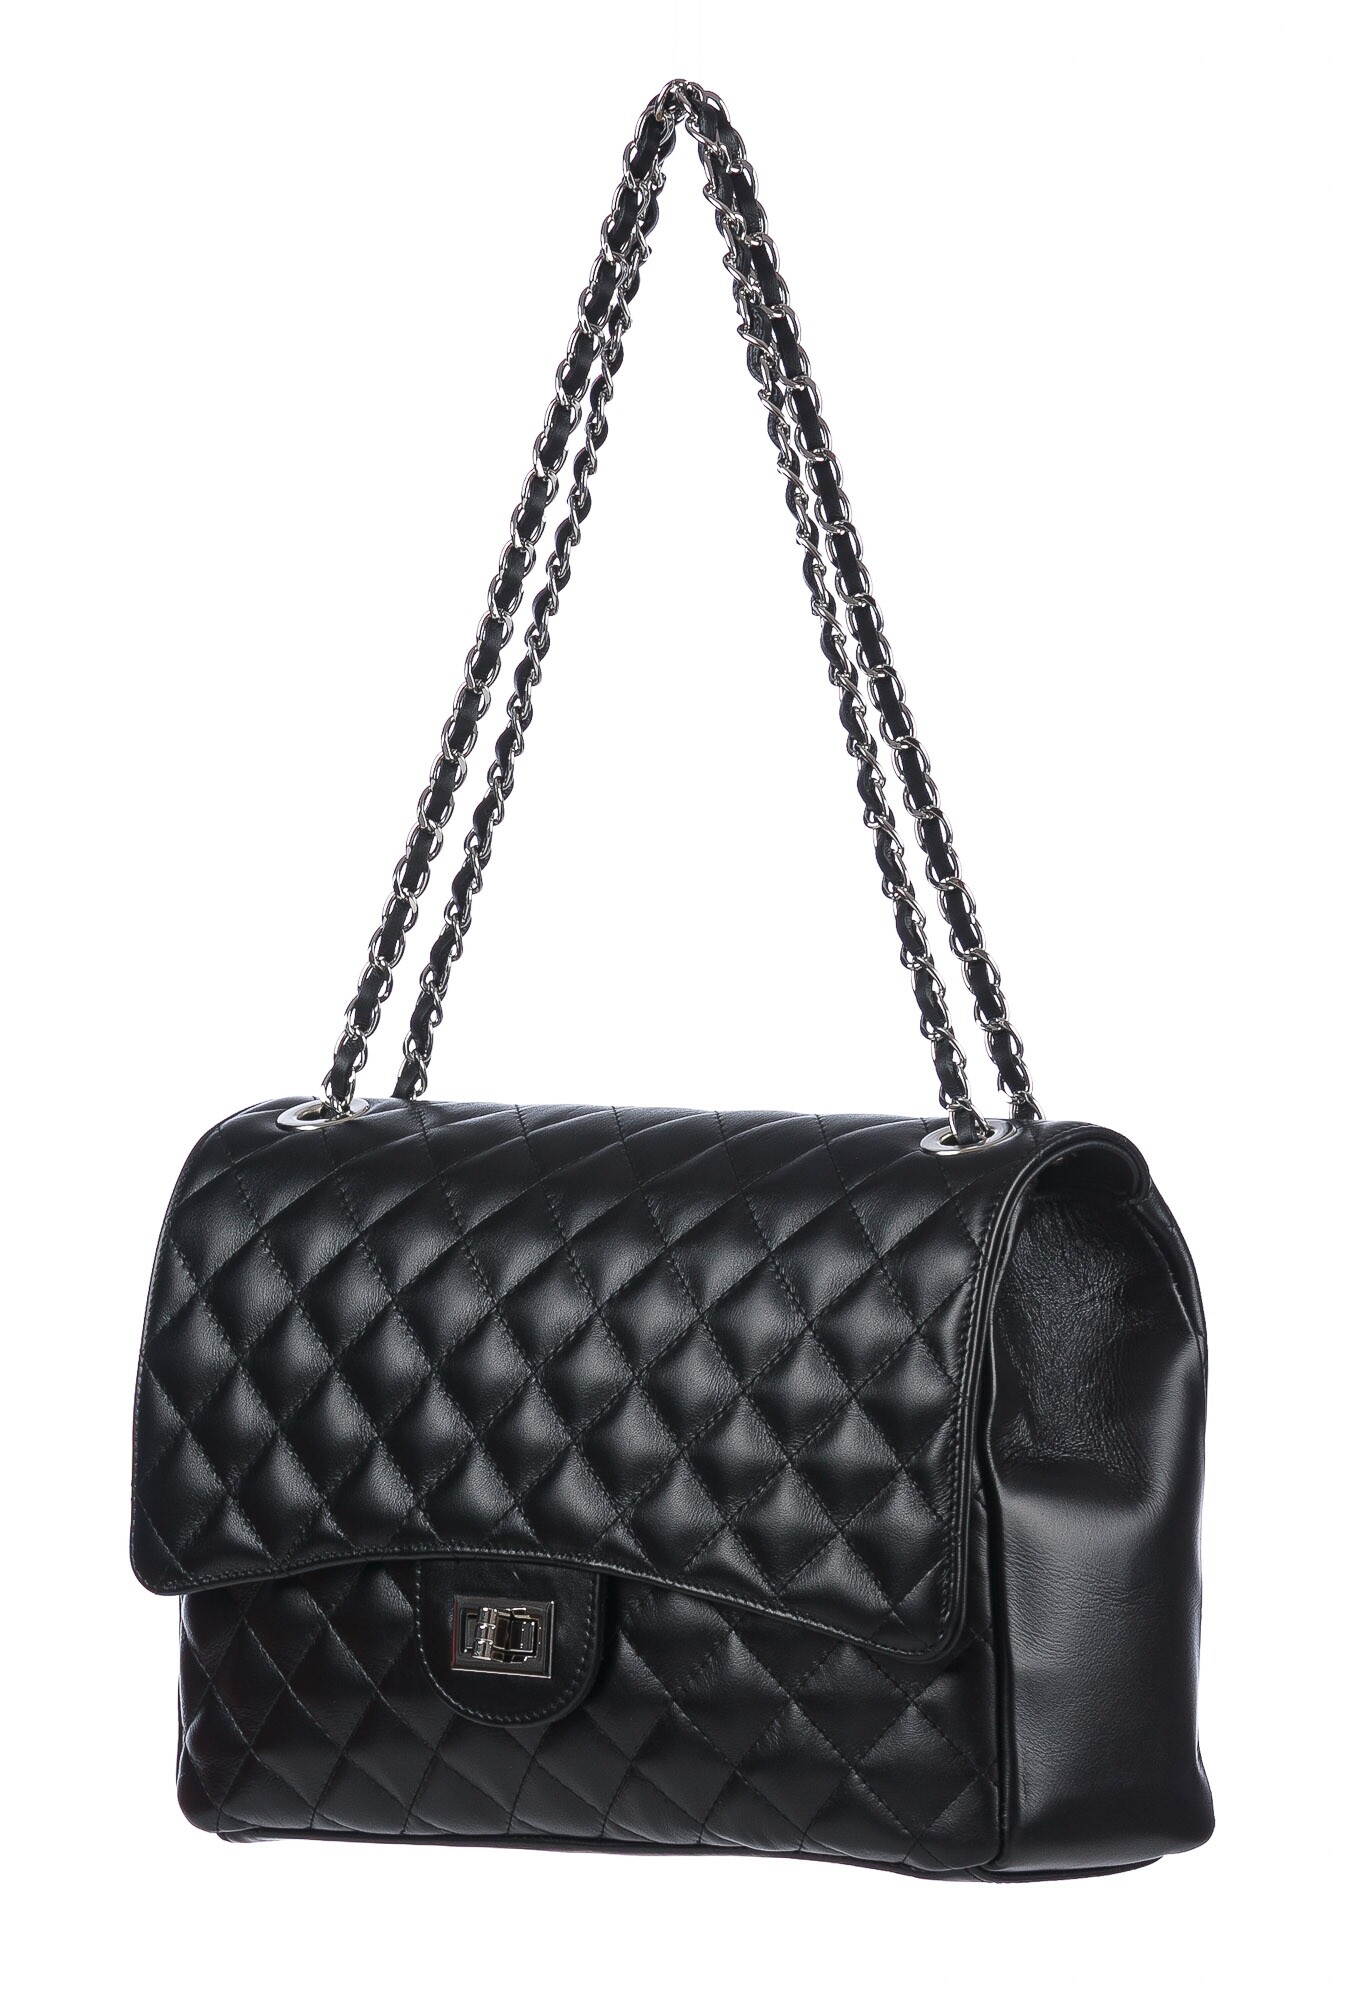 Genuine leather shoulder bag CHARLOTTE MAXI, BLACK colour, silver